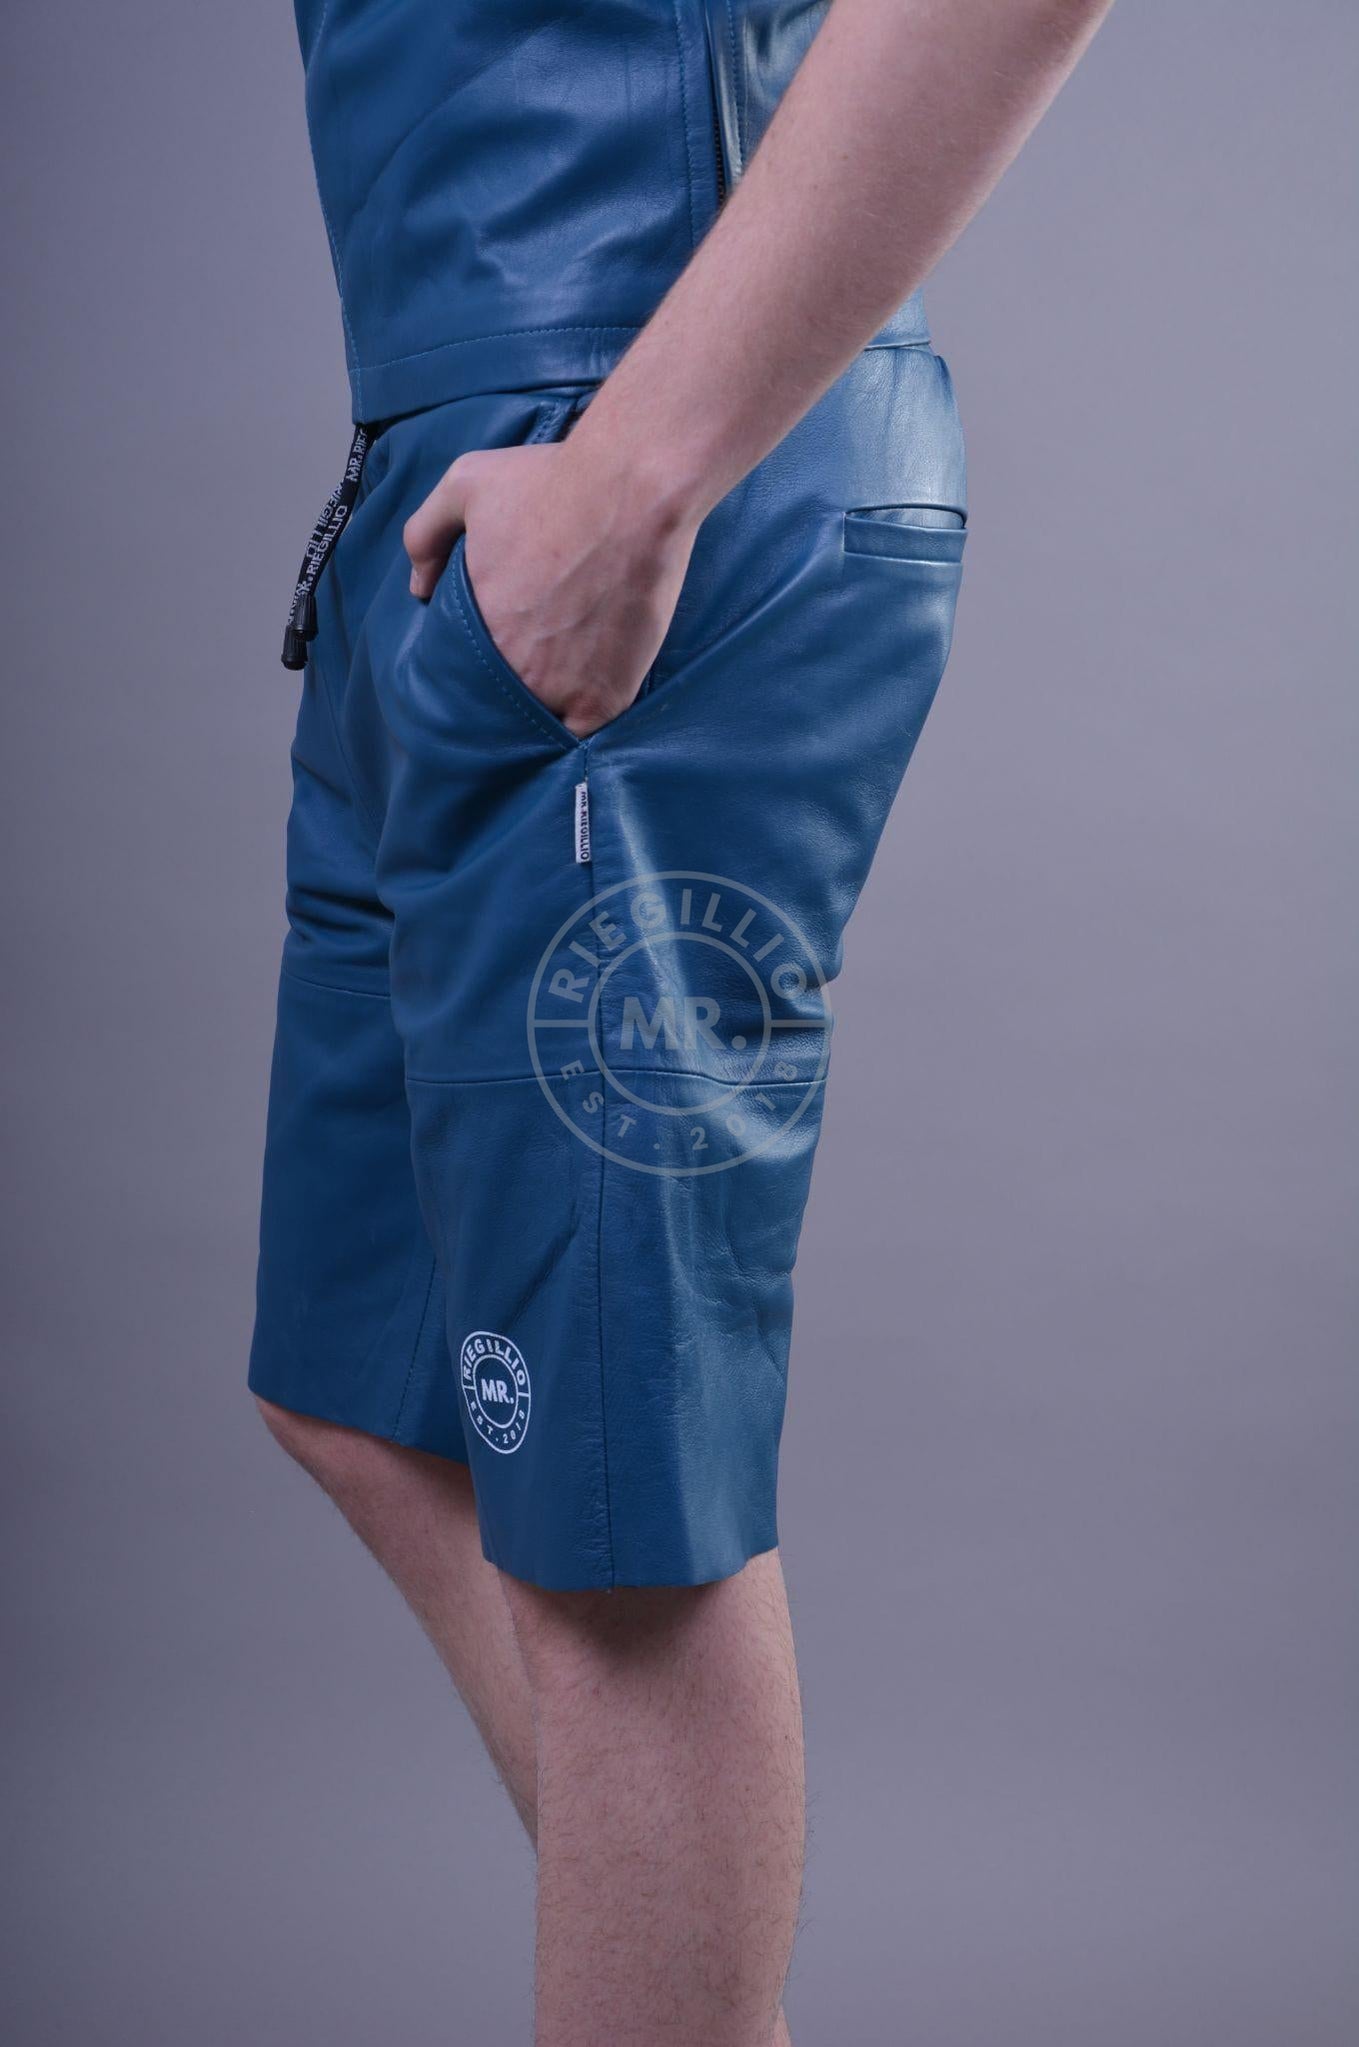 Jeans Blue Leather Long Short at MR. Riegillio